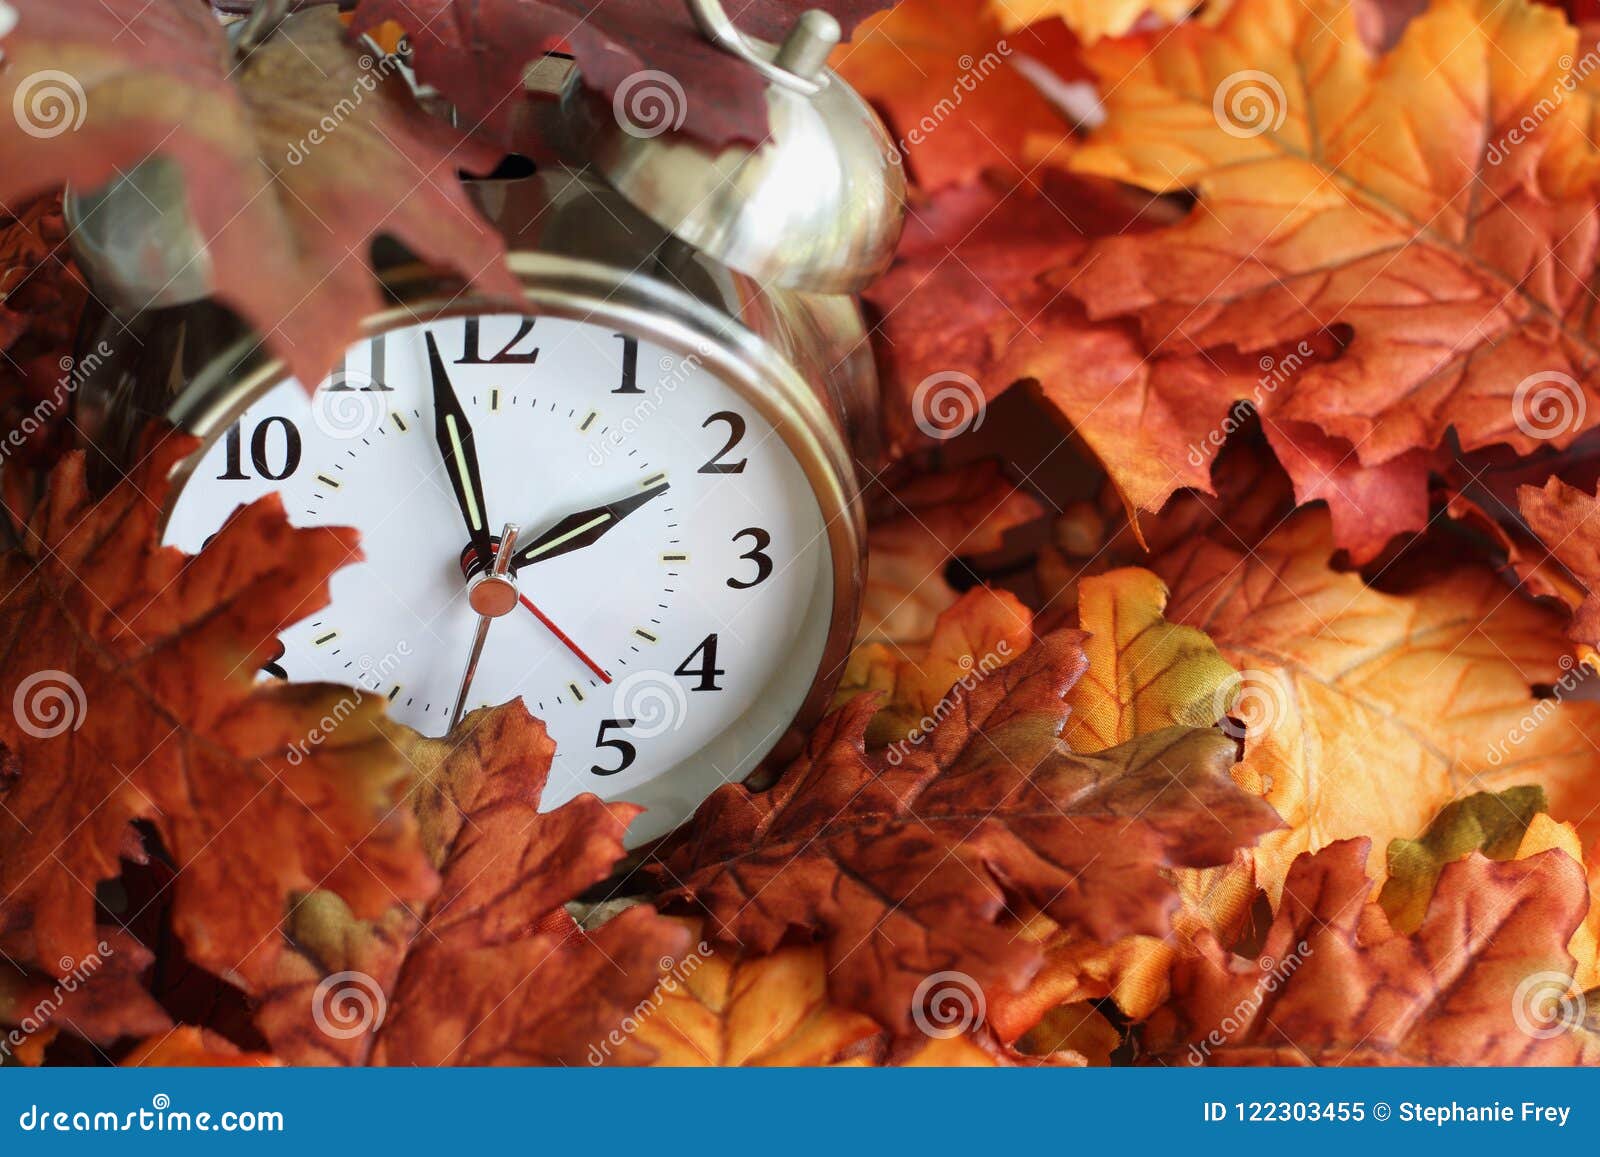 time change daylight savings buried clock